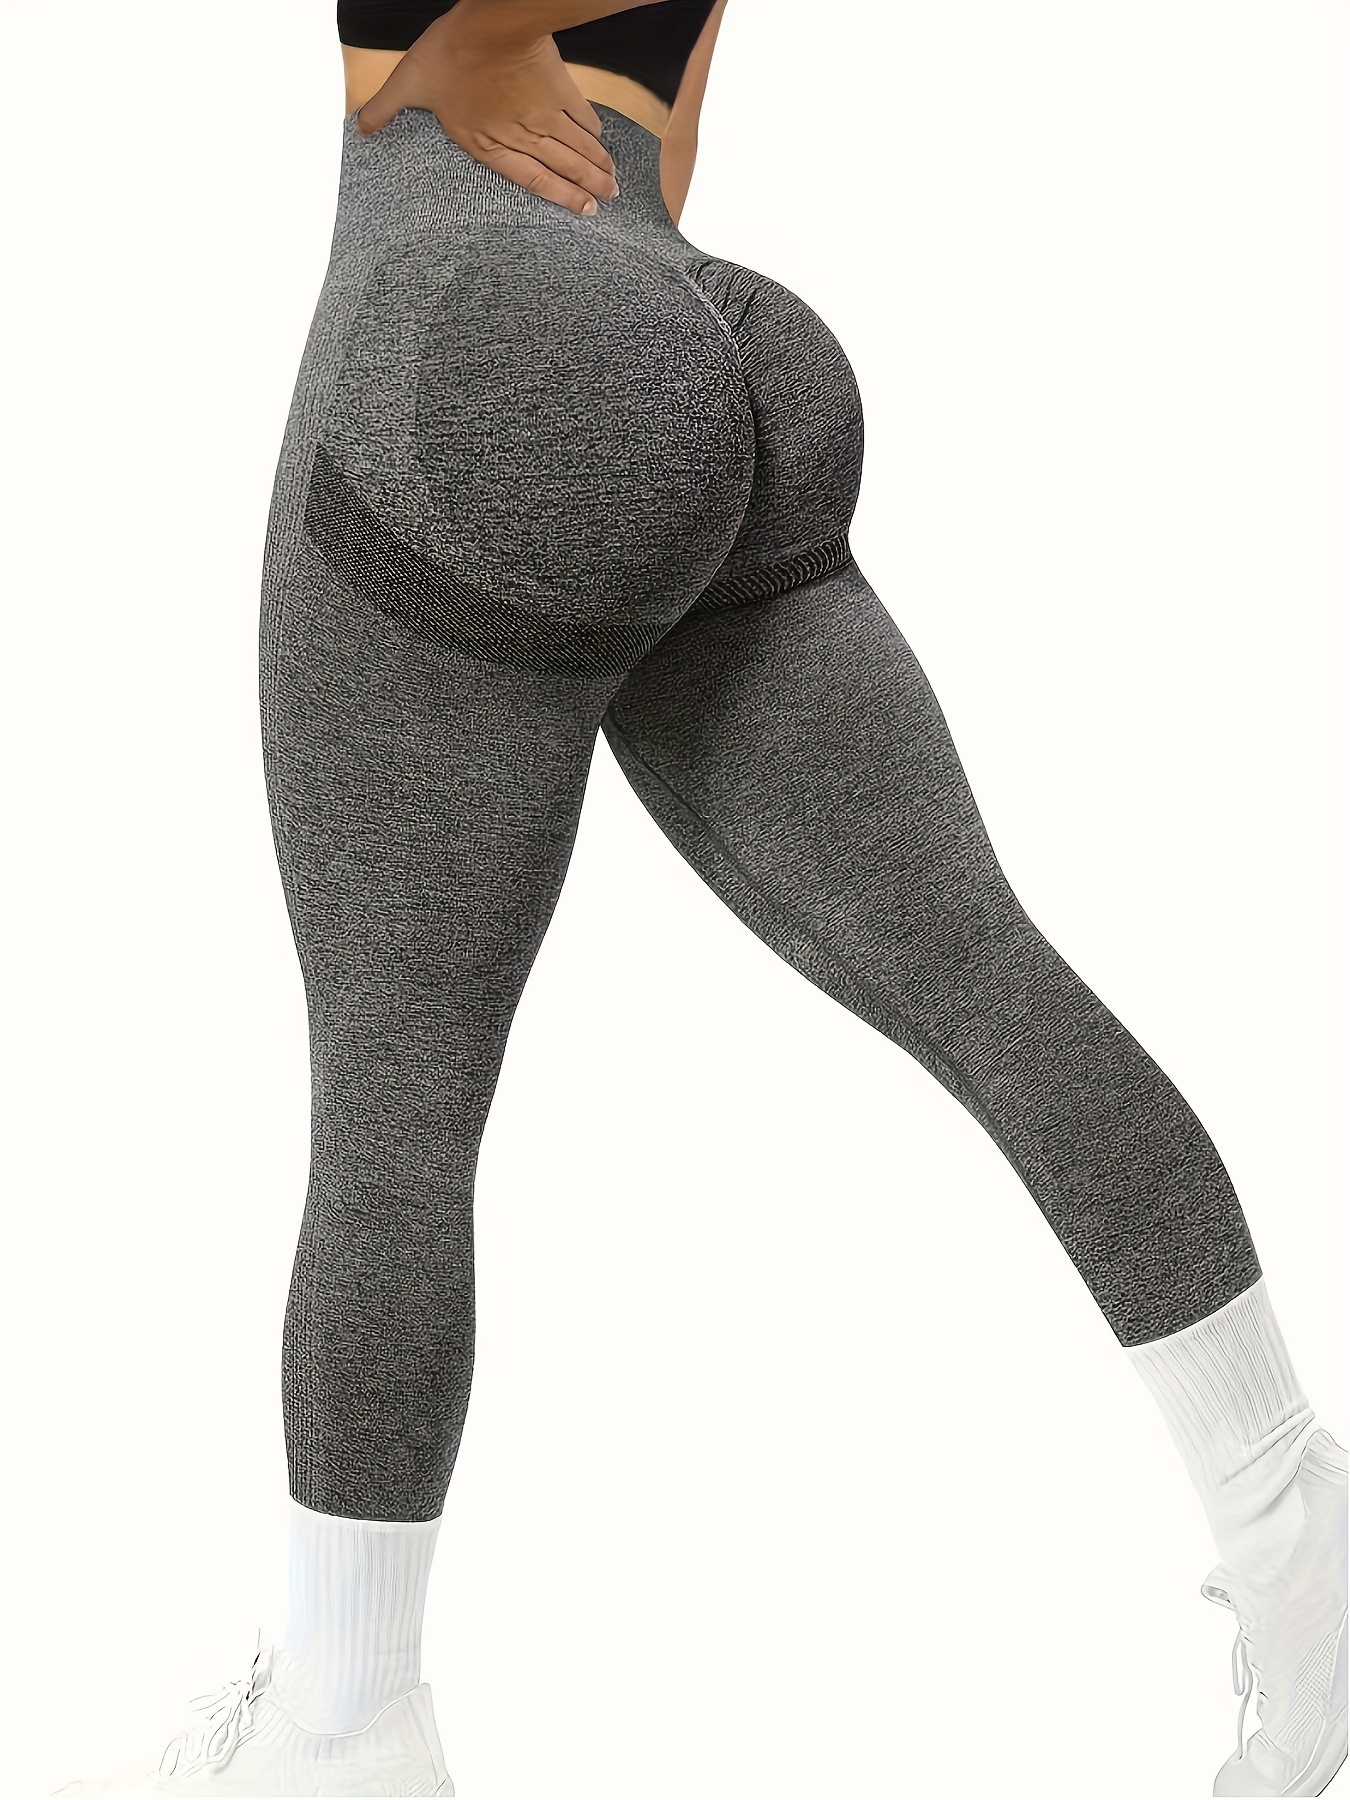 Seamless Ultra-Fine Brushed Nude Feel Yoga Pants High Waist Hip Raise  Sports Fitness Pocket Pants Workout Gym Leggings for Women